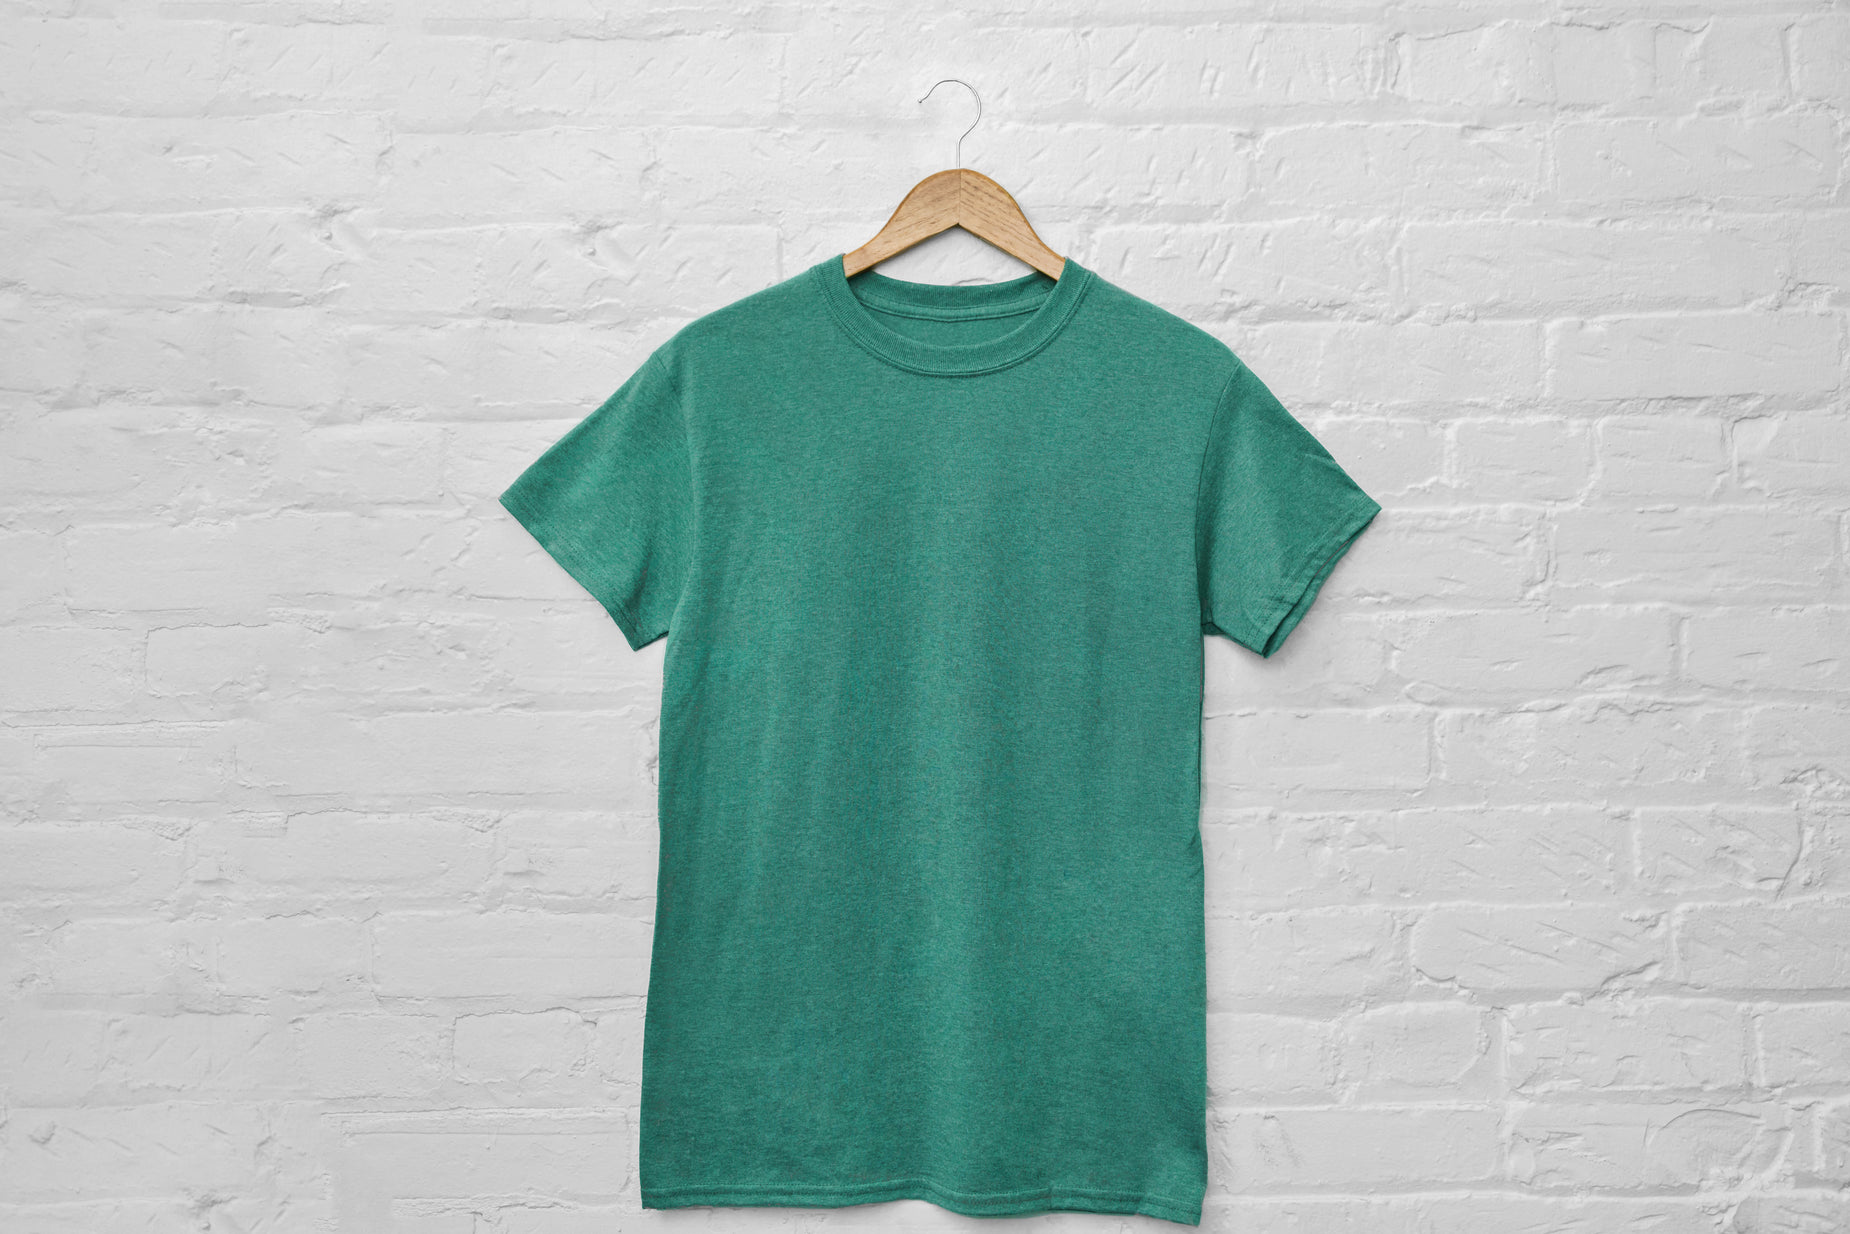 a green shirt hanging up against a brick wall